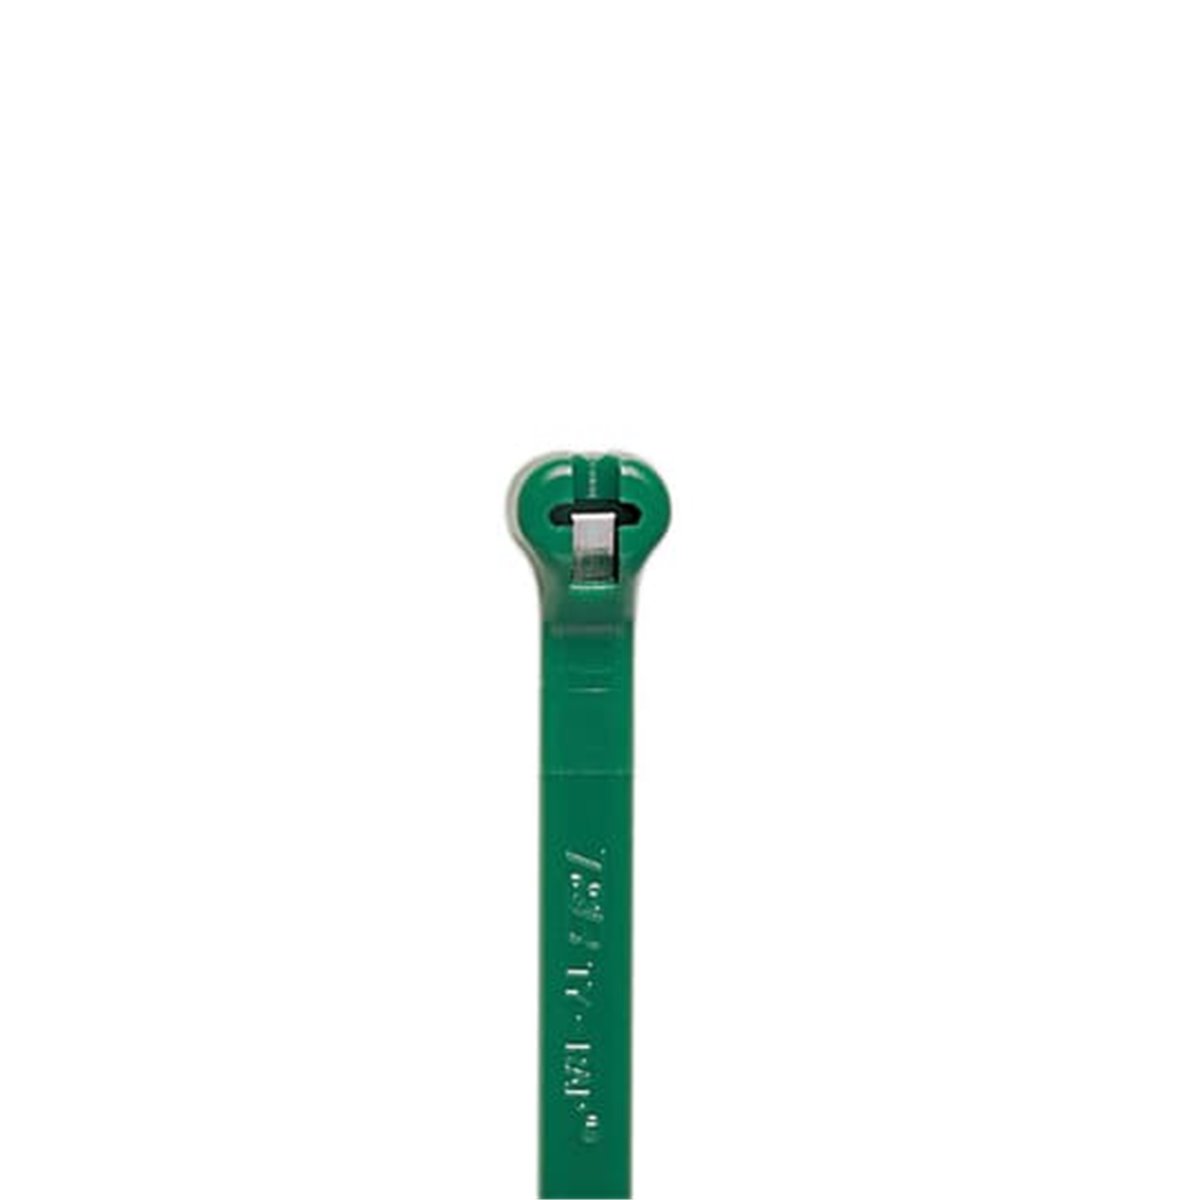 TY29M-5 Opaska kablowa TY-RAP, Zielony,  opak. 500 szt. 7TCG009370R0035